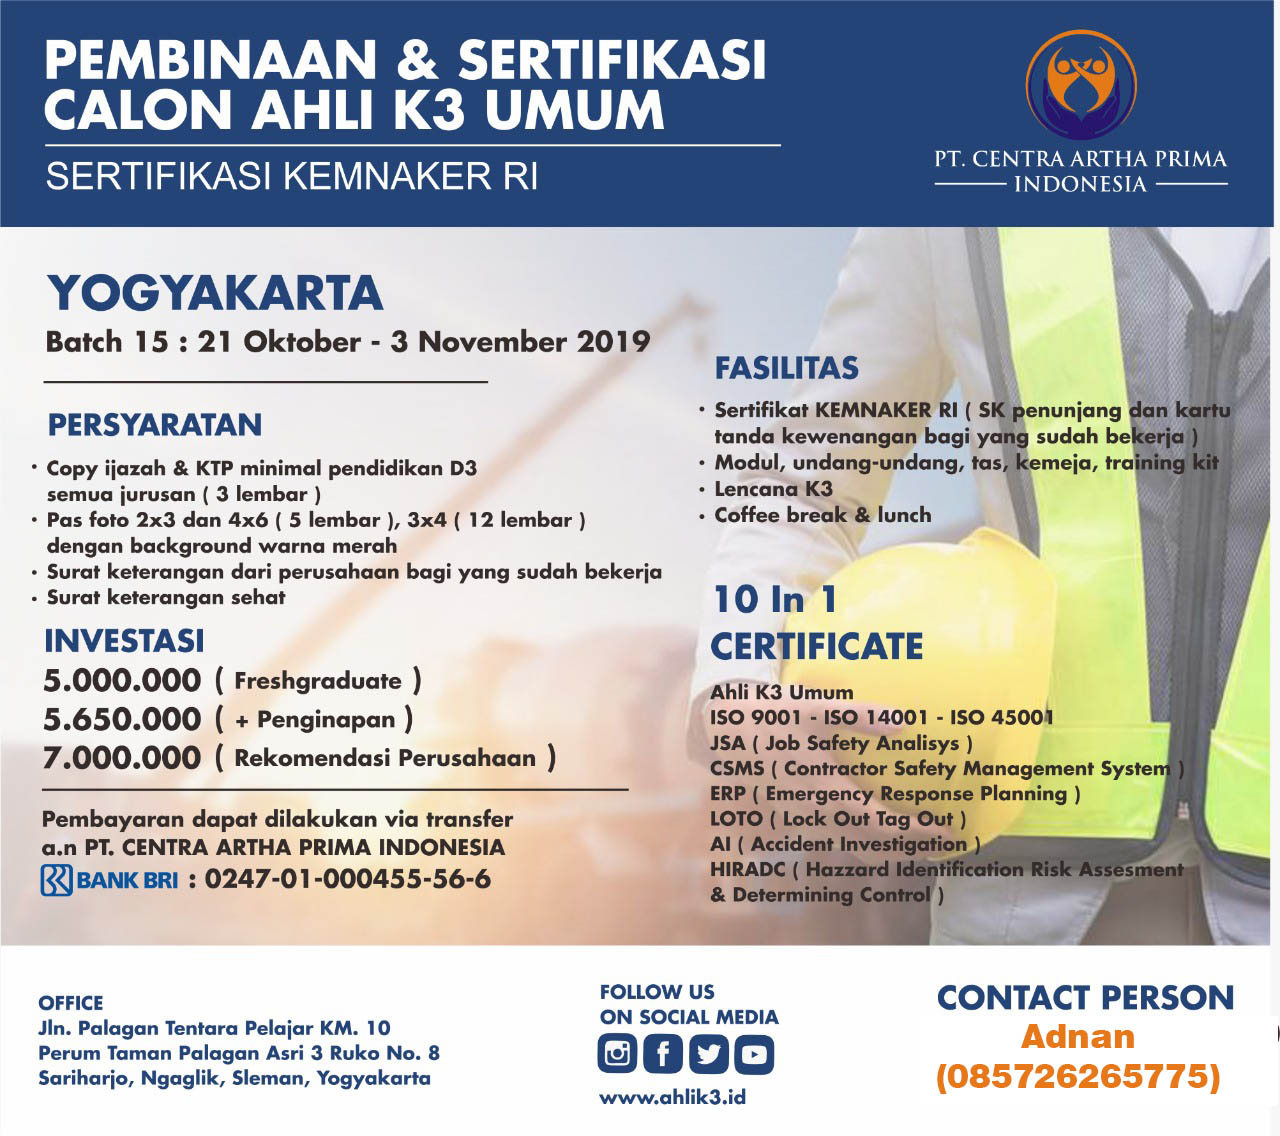 Pelatihan Calon Ahli K3 Umum Yogyakarta, Jakarta dan Purwokerto